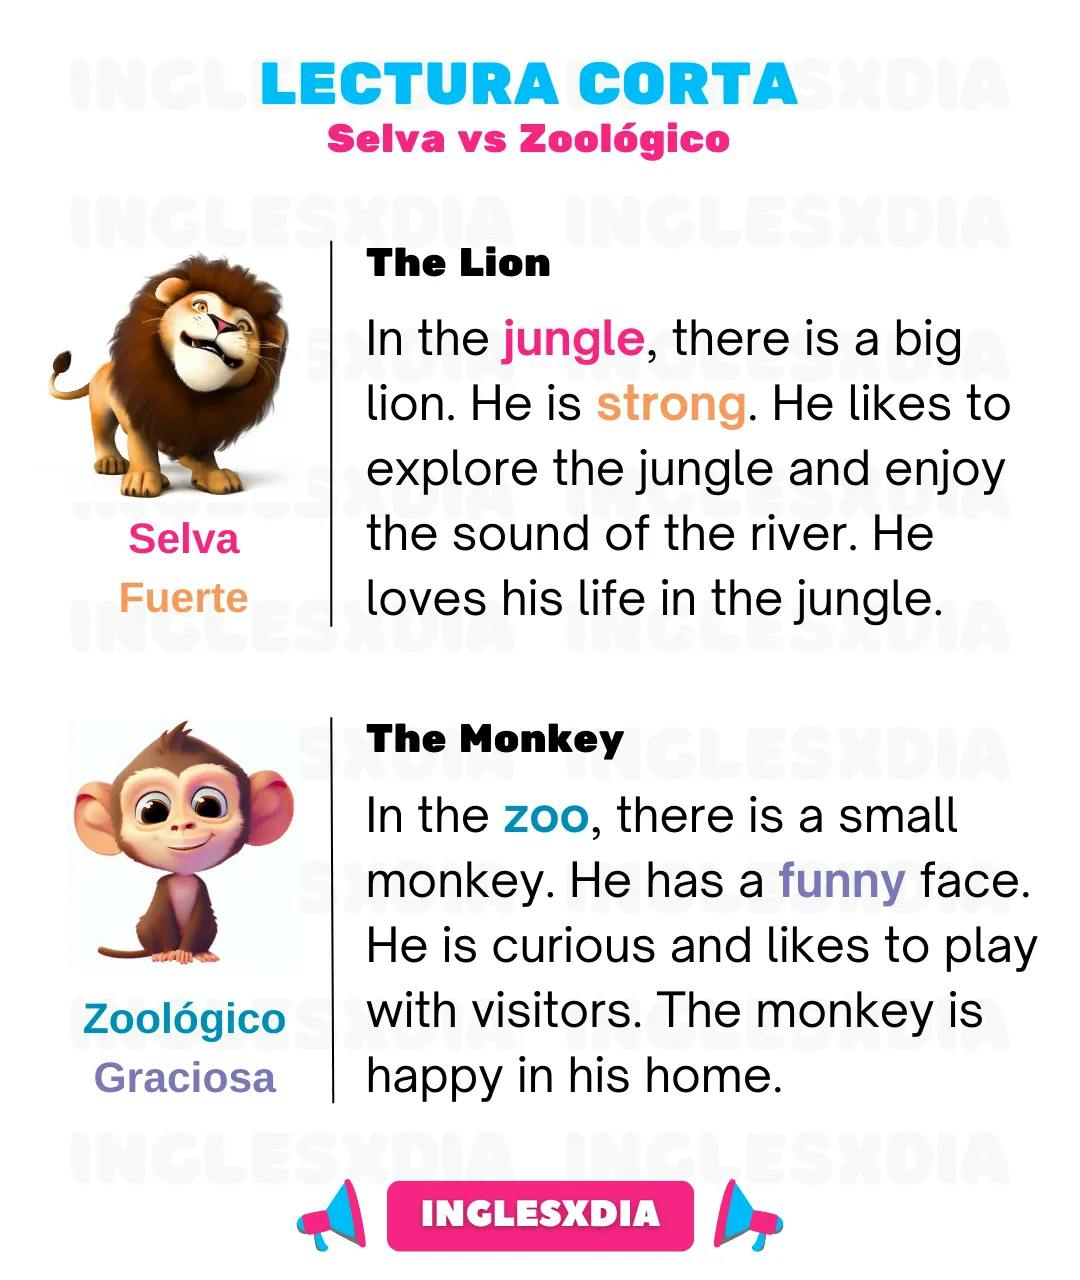 Jungle vs Zoo